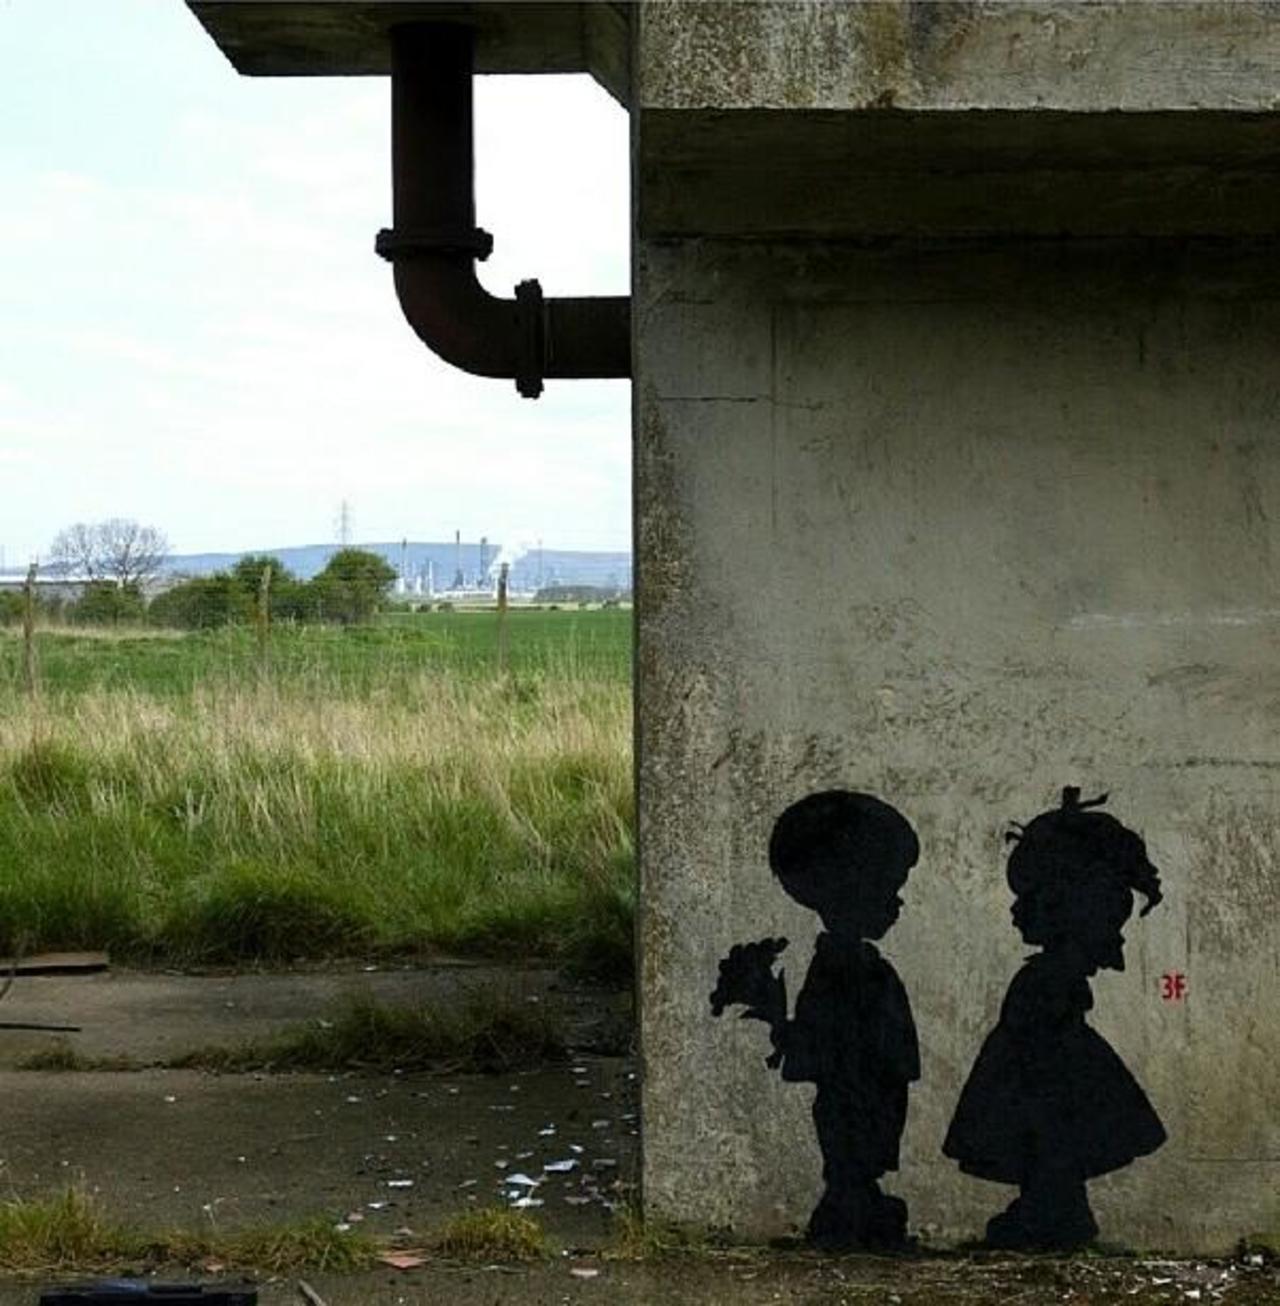 Found love in a hopeless place!

Street Art by 3fountains 

#art #mural #graffiti #streetart http://t.co/iiy1e44kFW